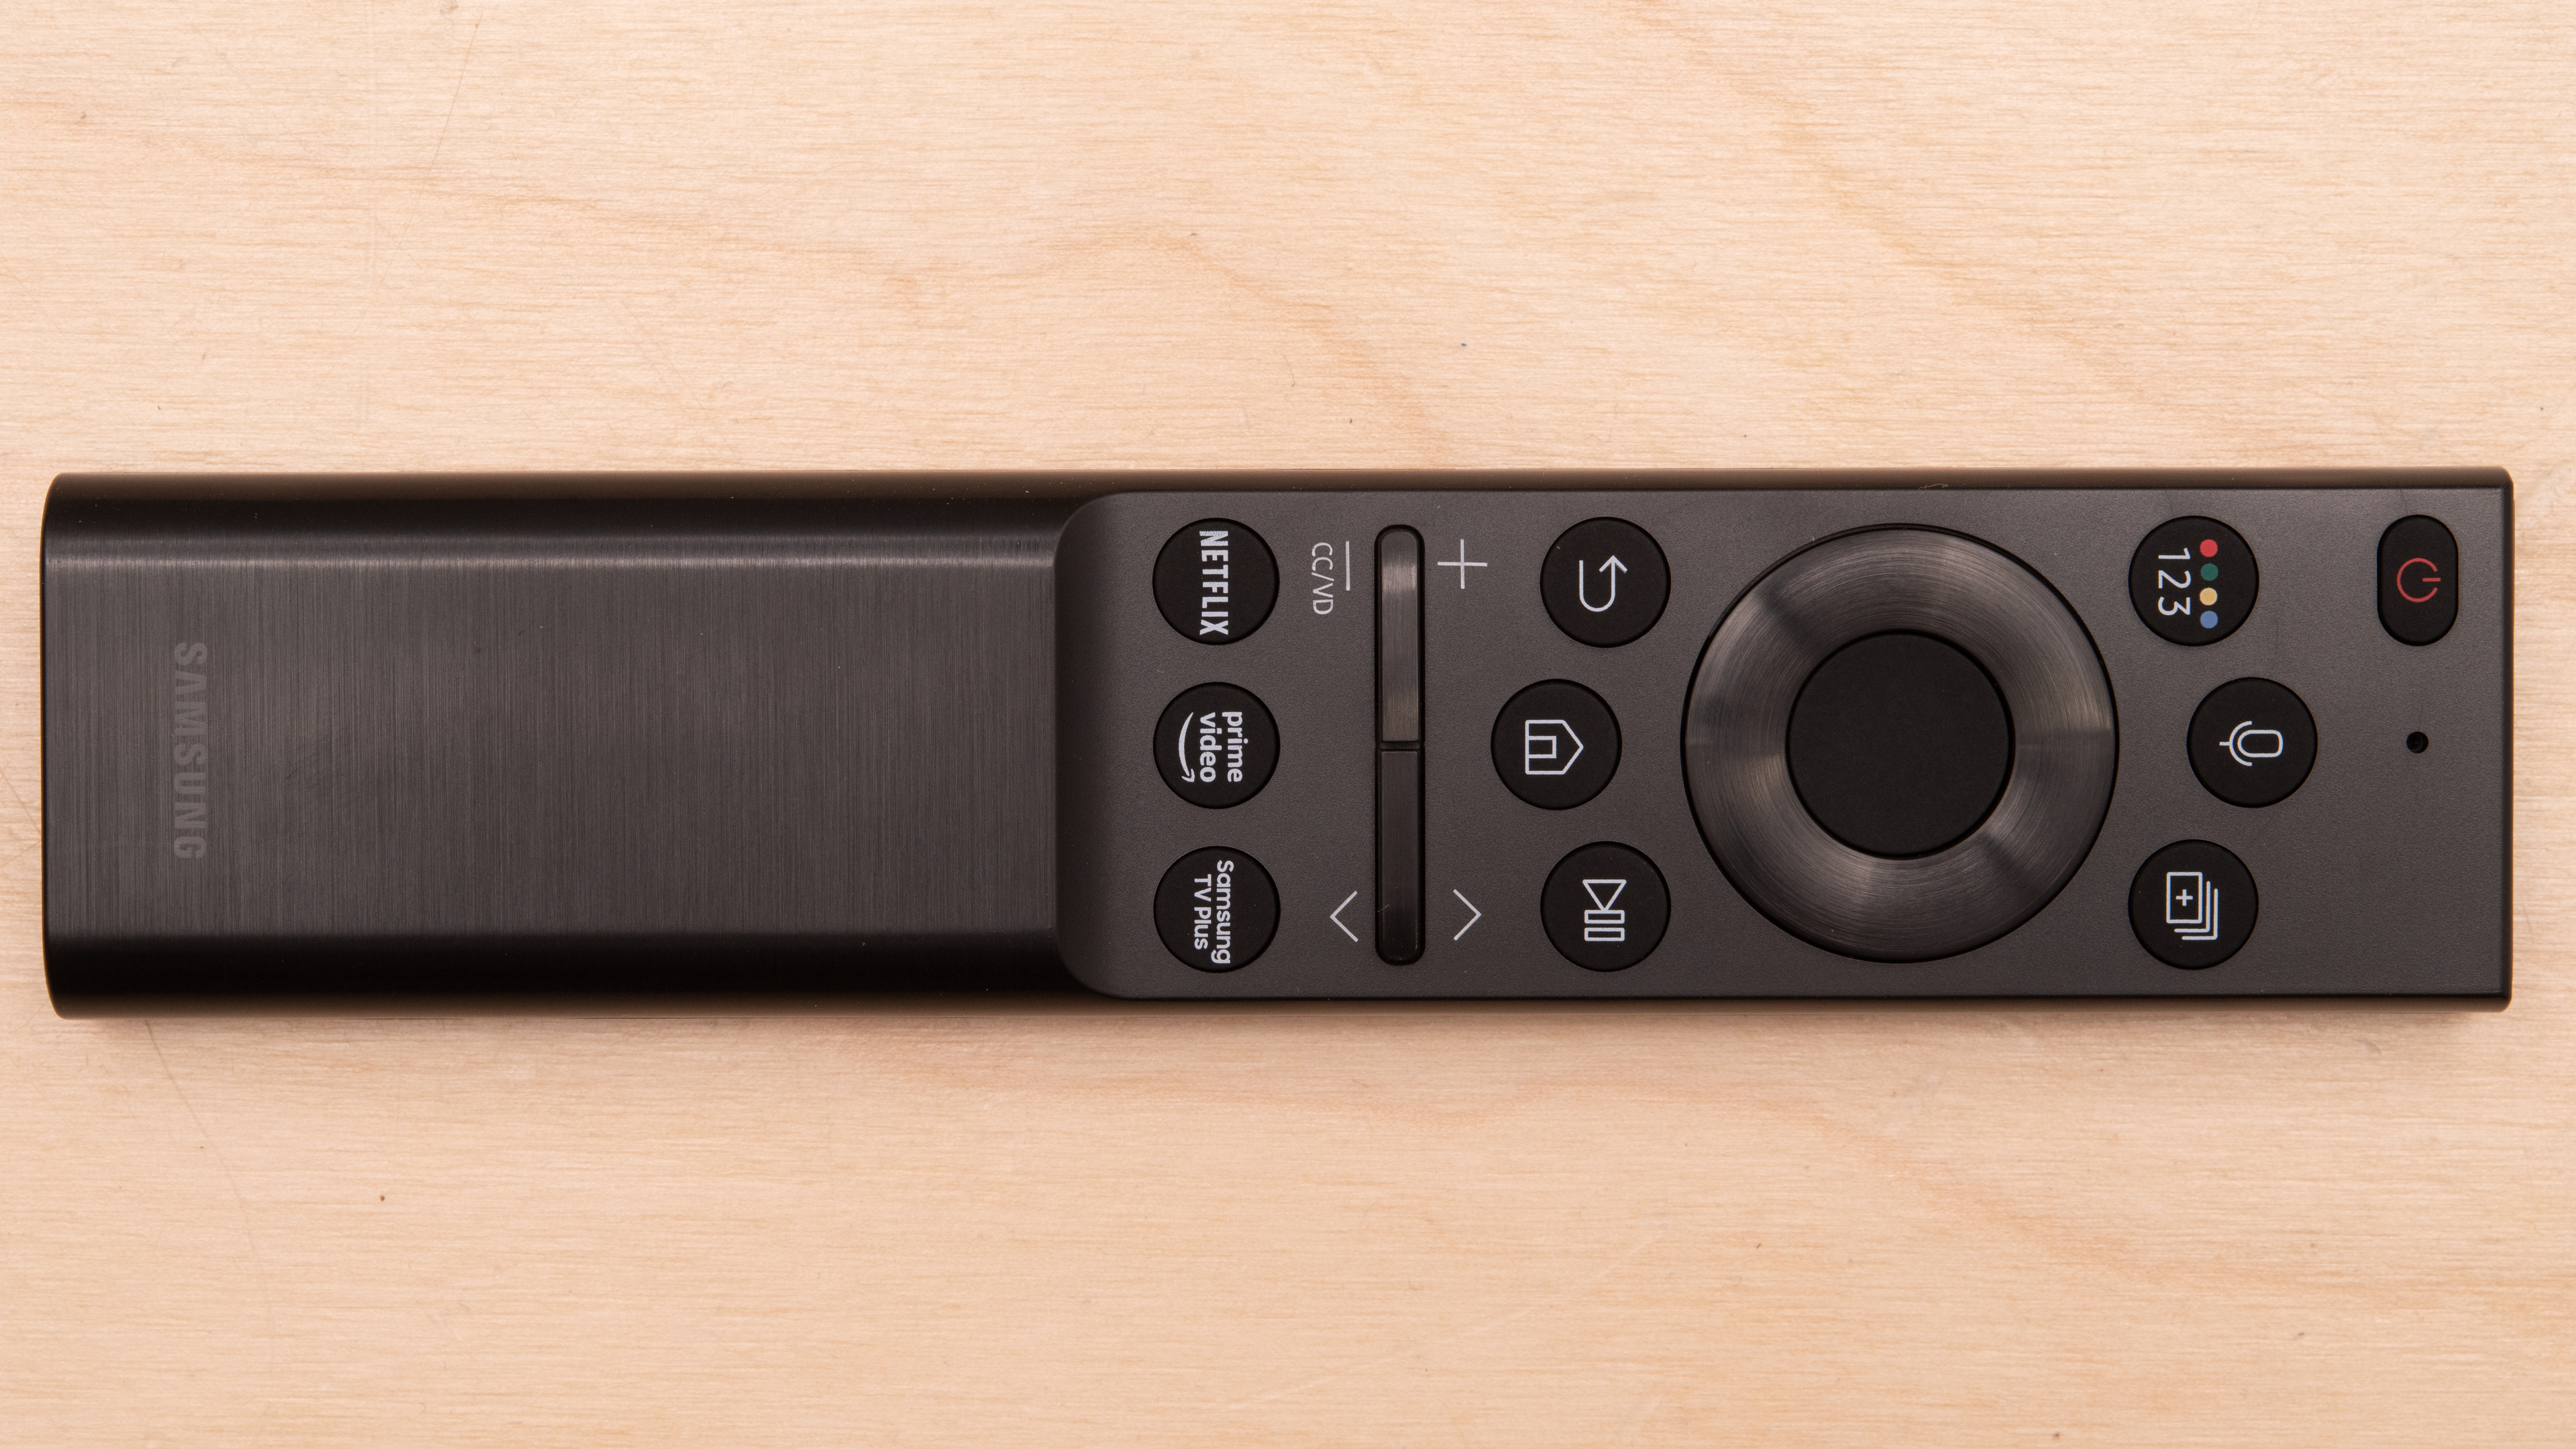 Samsung Smart TV Remote